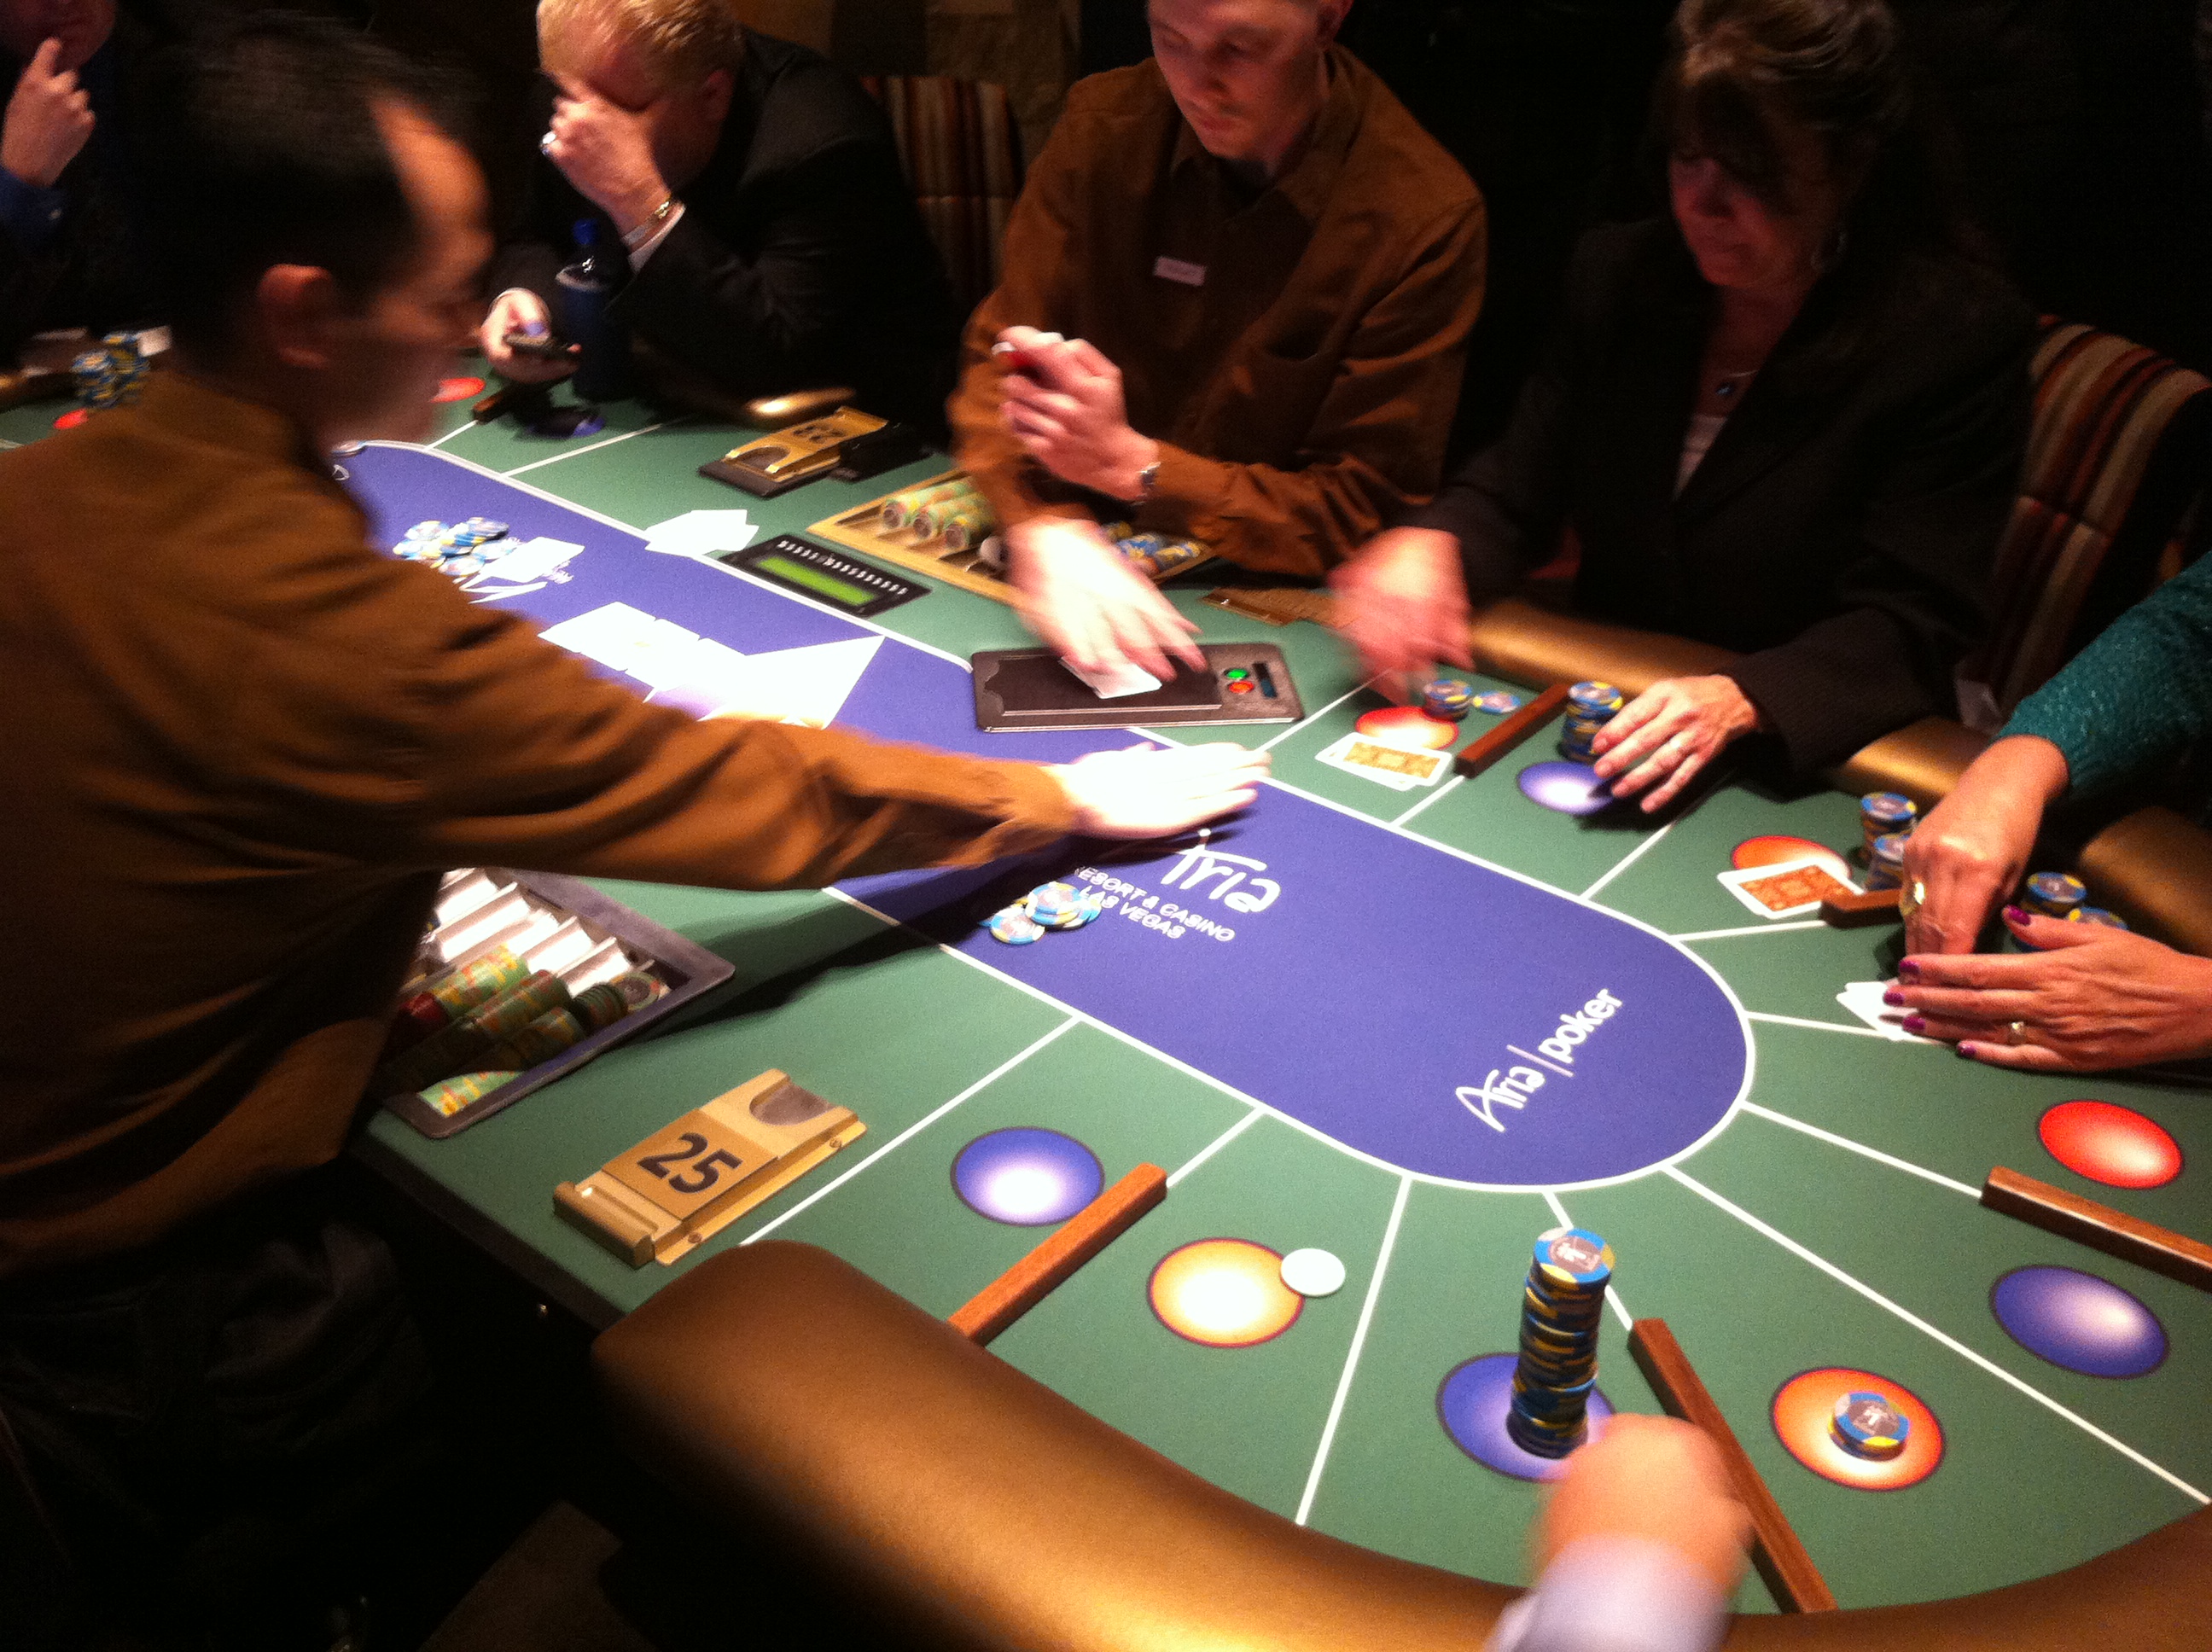 Humaan Frank Worthley gek Multi-Action Poker Table @ Aria | Nolan's blog - Travel, Food, Poker, Photos